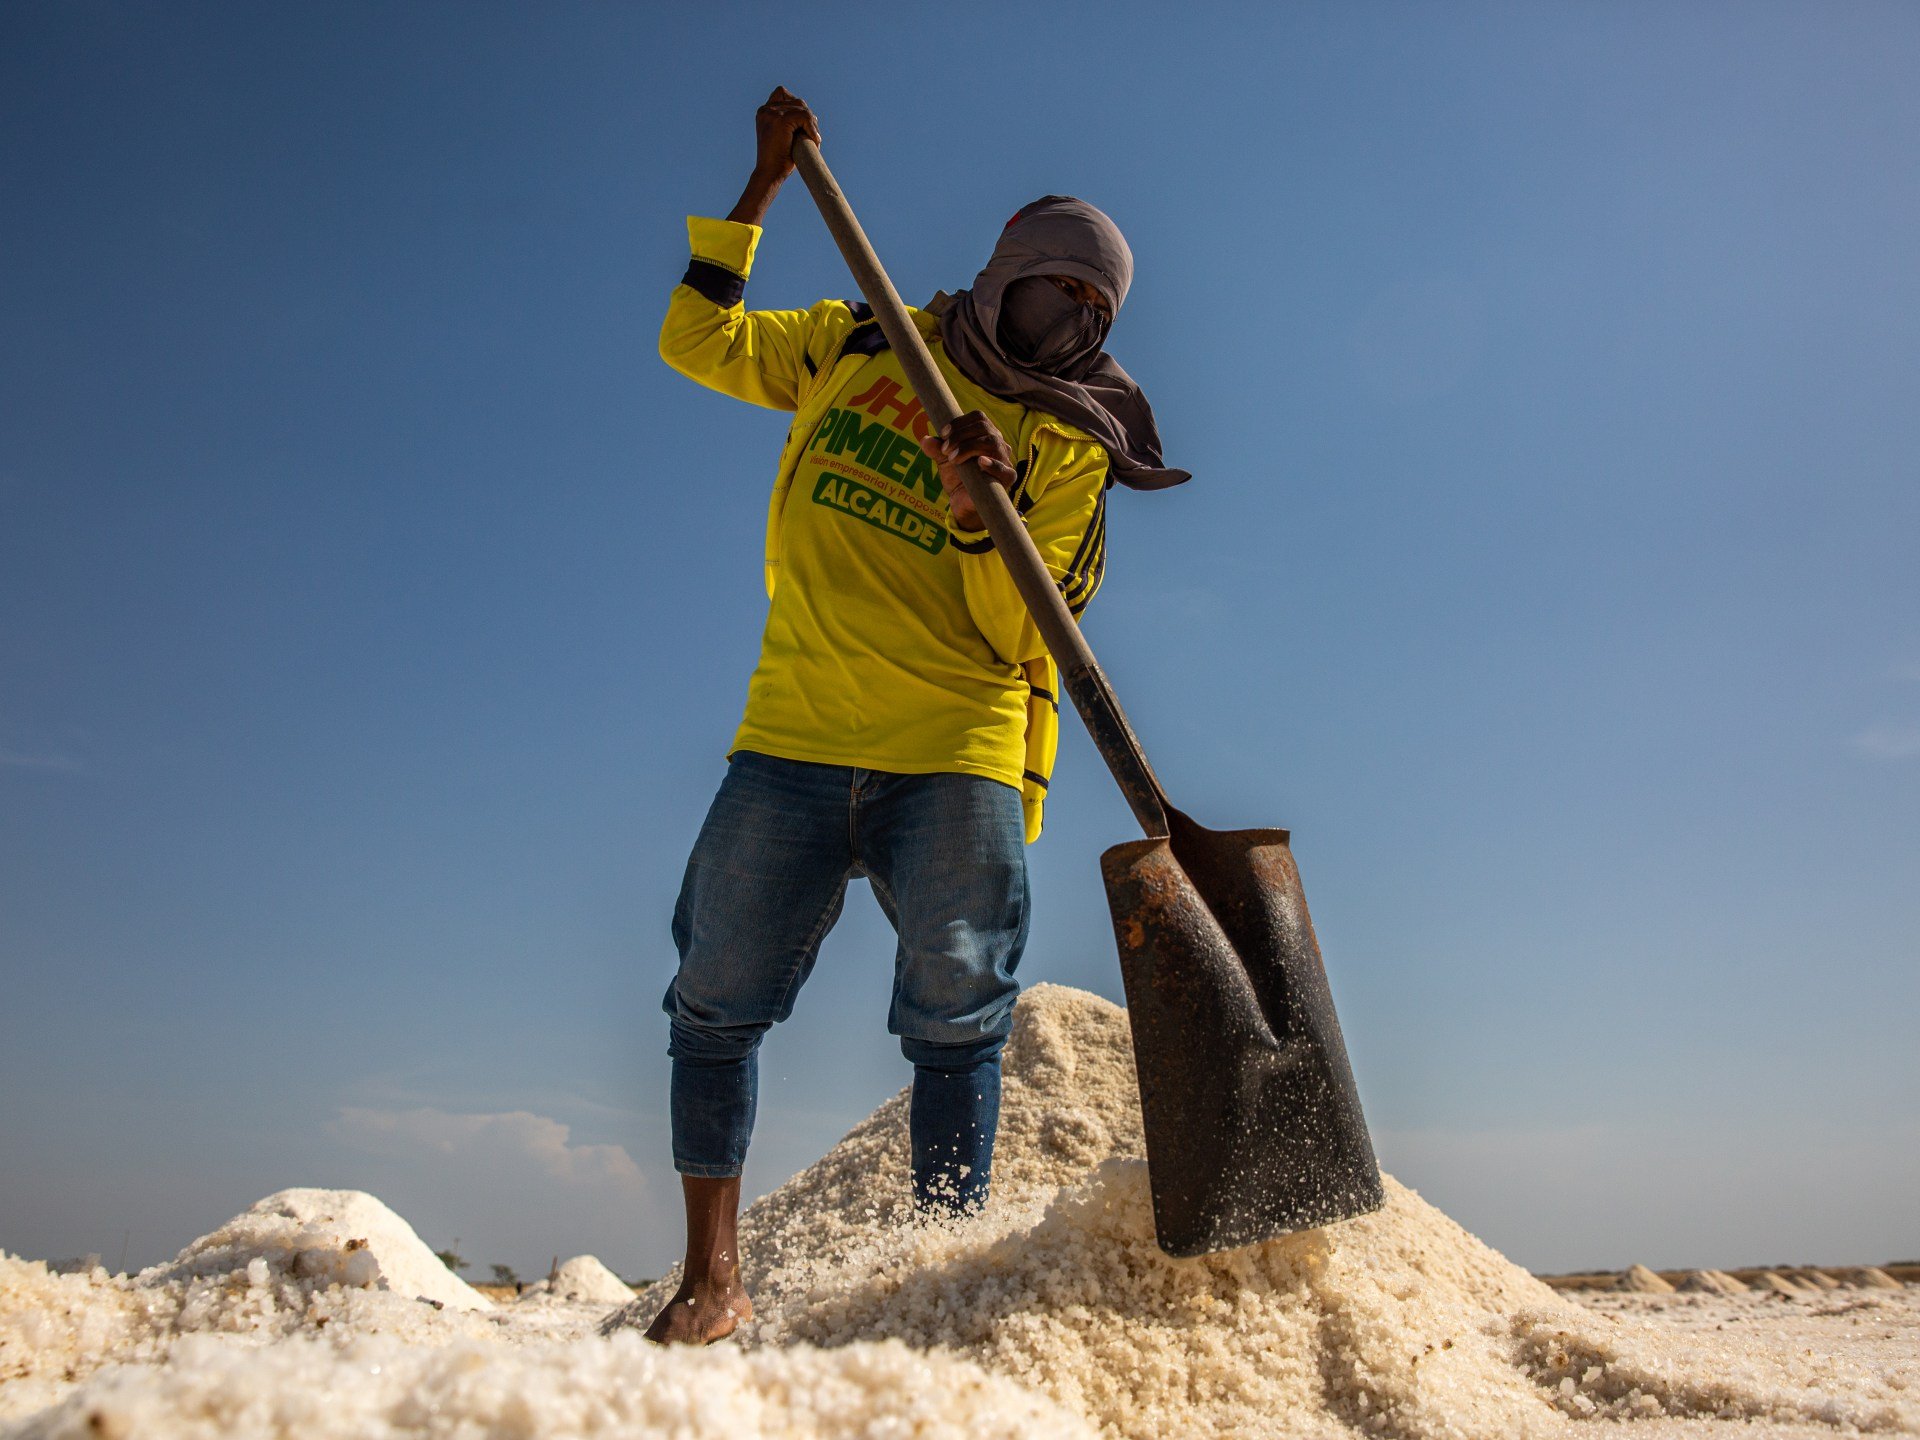 Can salt mitigate hunger? Inside the salt flats of La Guajira, Colombia